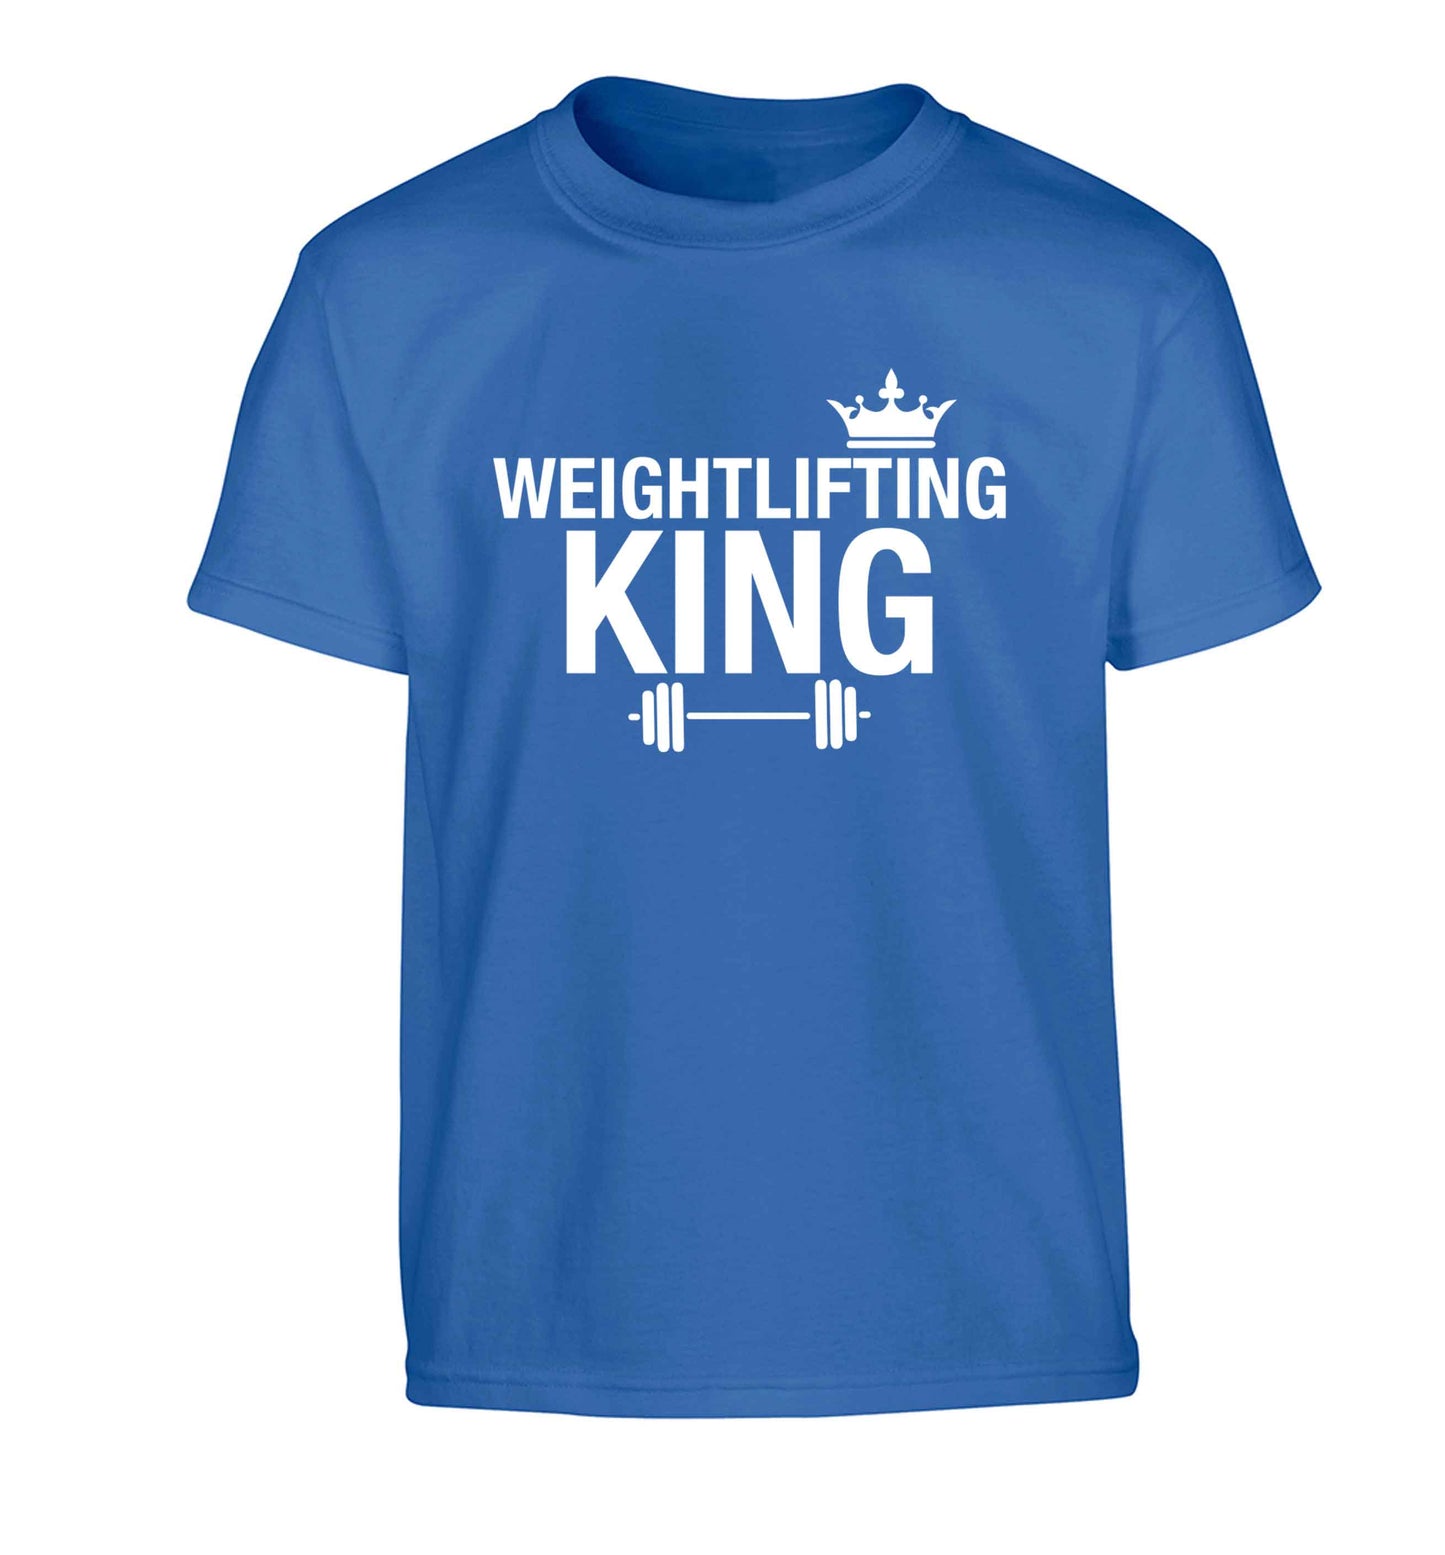 Weightlifting king Children's blue Tshirt 12-13 Years